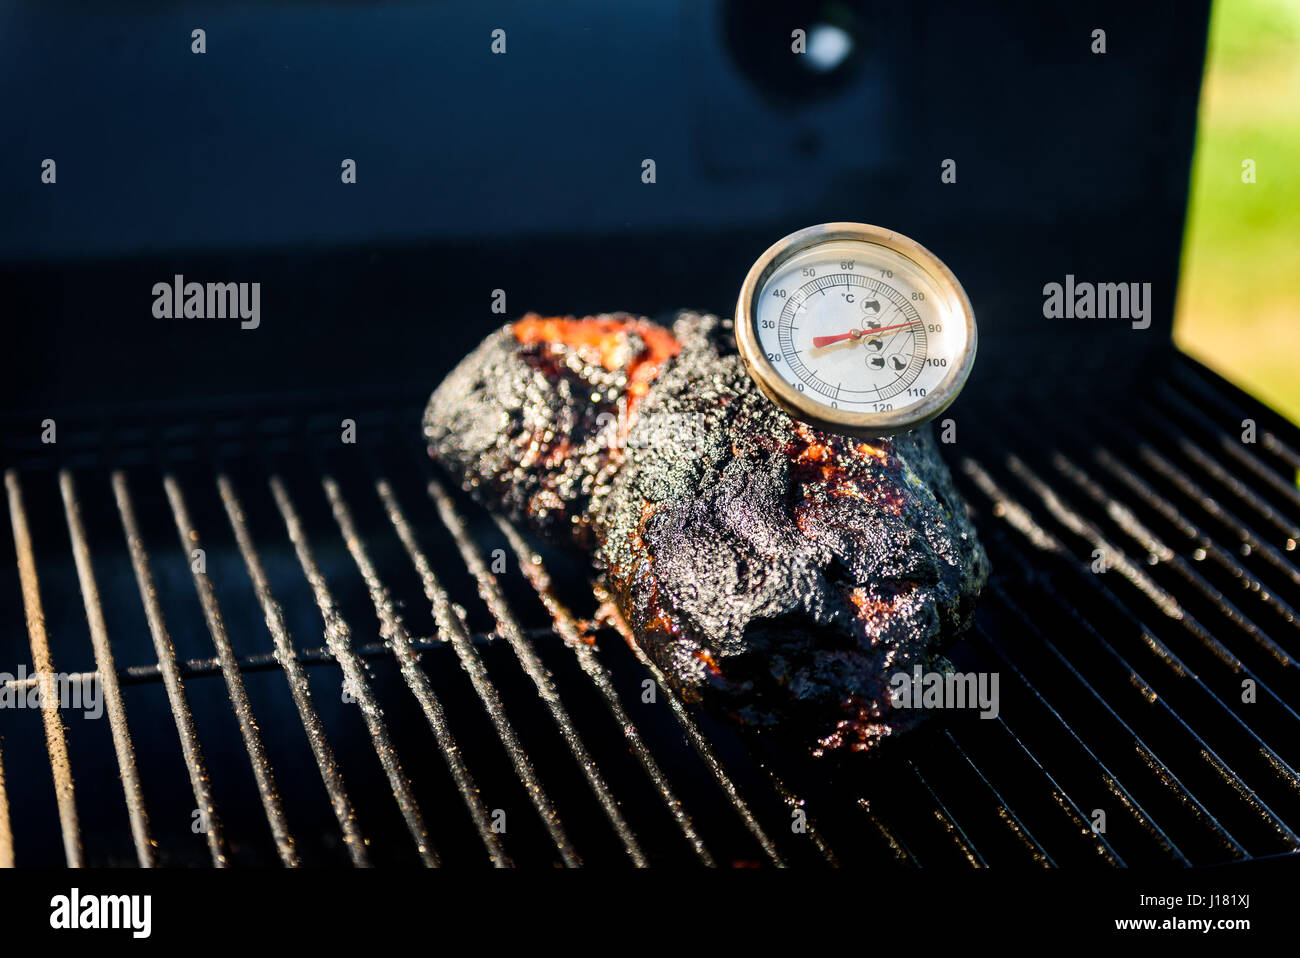 https://c8.alamy.com/comp/J181XJ/family-backyard-barbecue-bbq-picnic-checking-the-correct-temperature-J181XJ.jpg